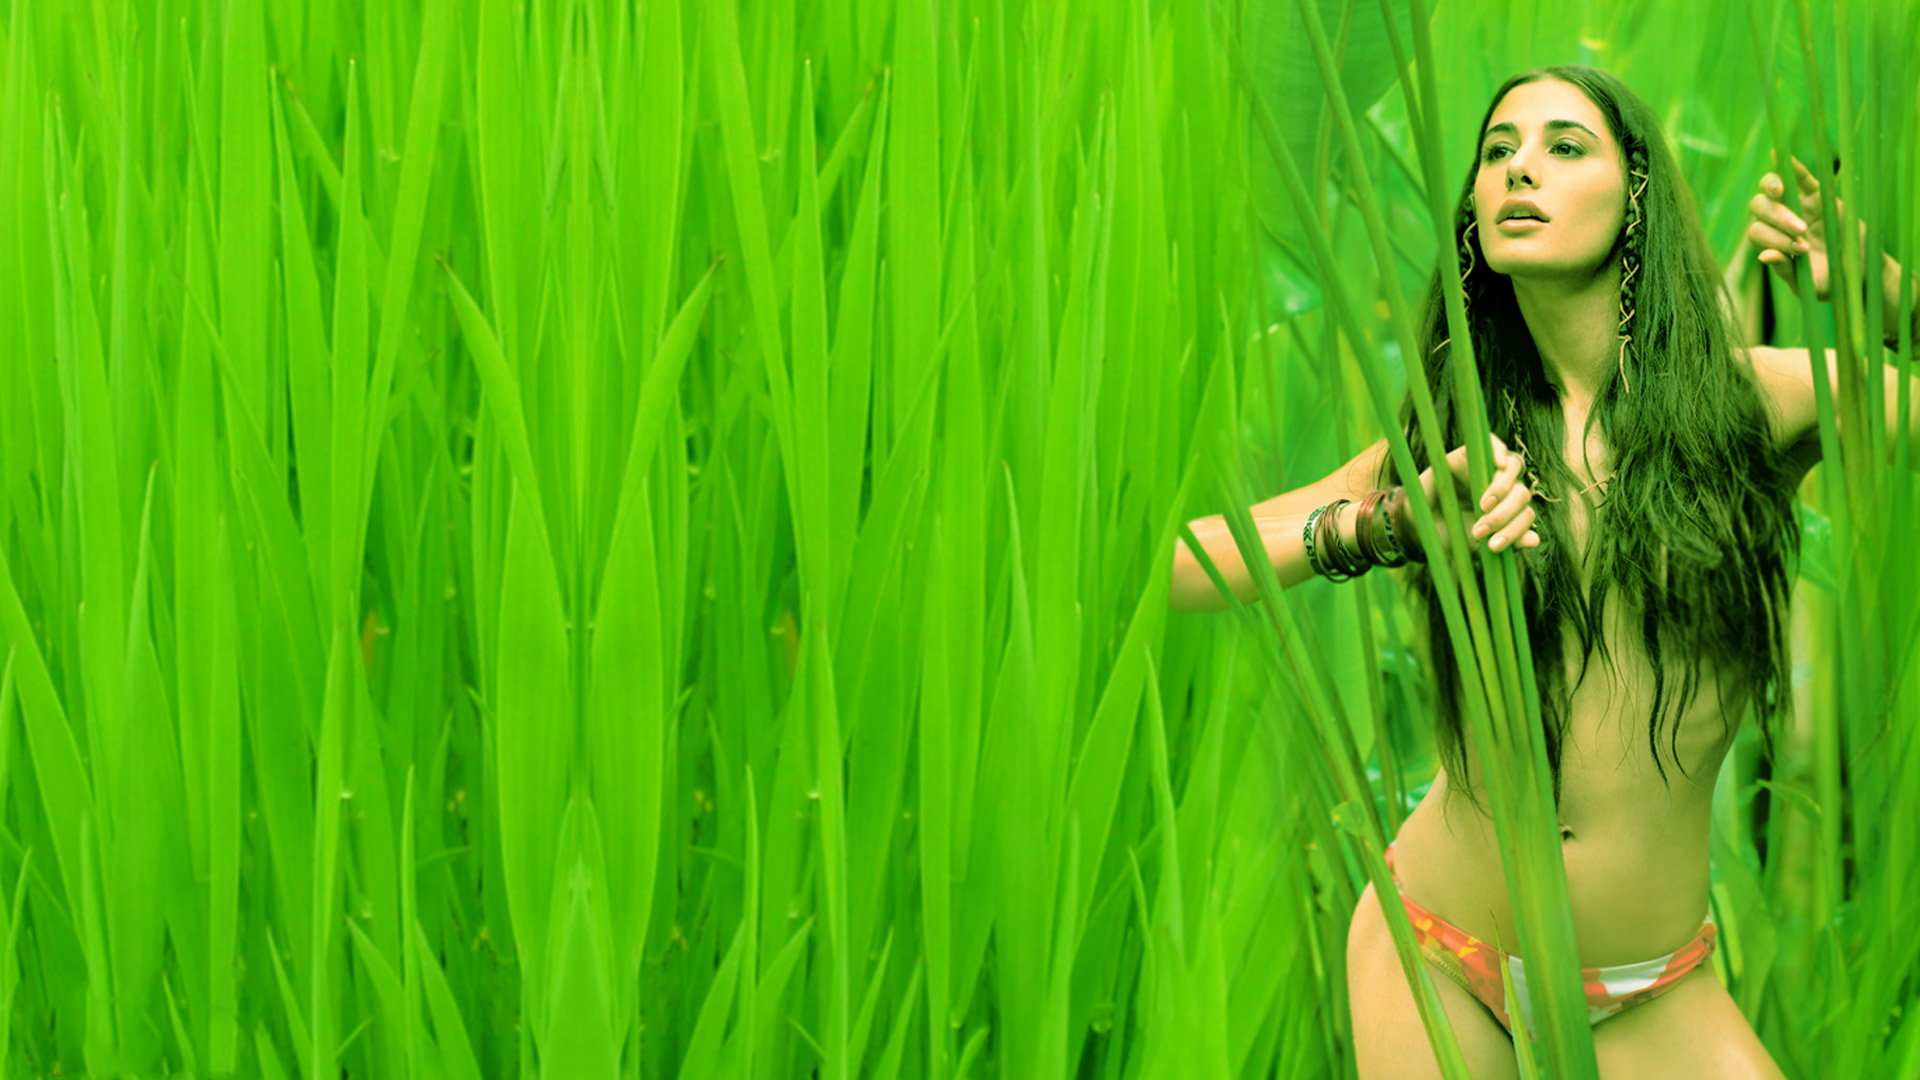 bikini fondos de pantalla hd,verde,césped,familia de la hierba,planta,cabello negro